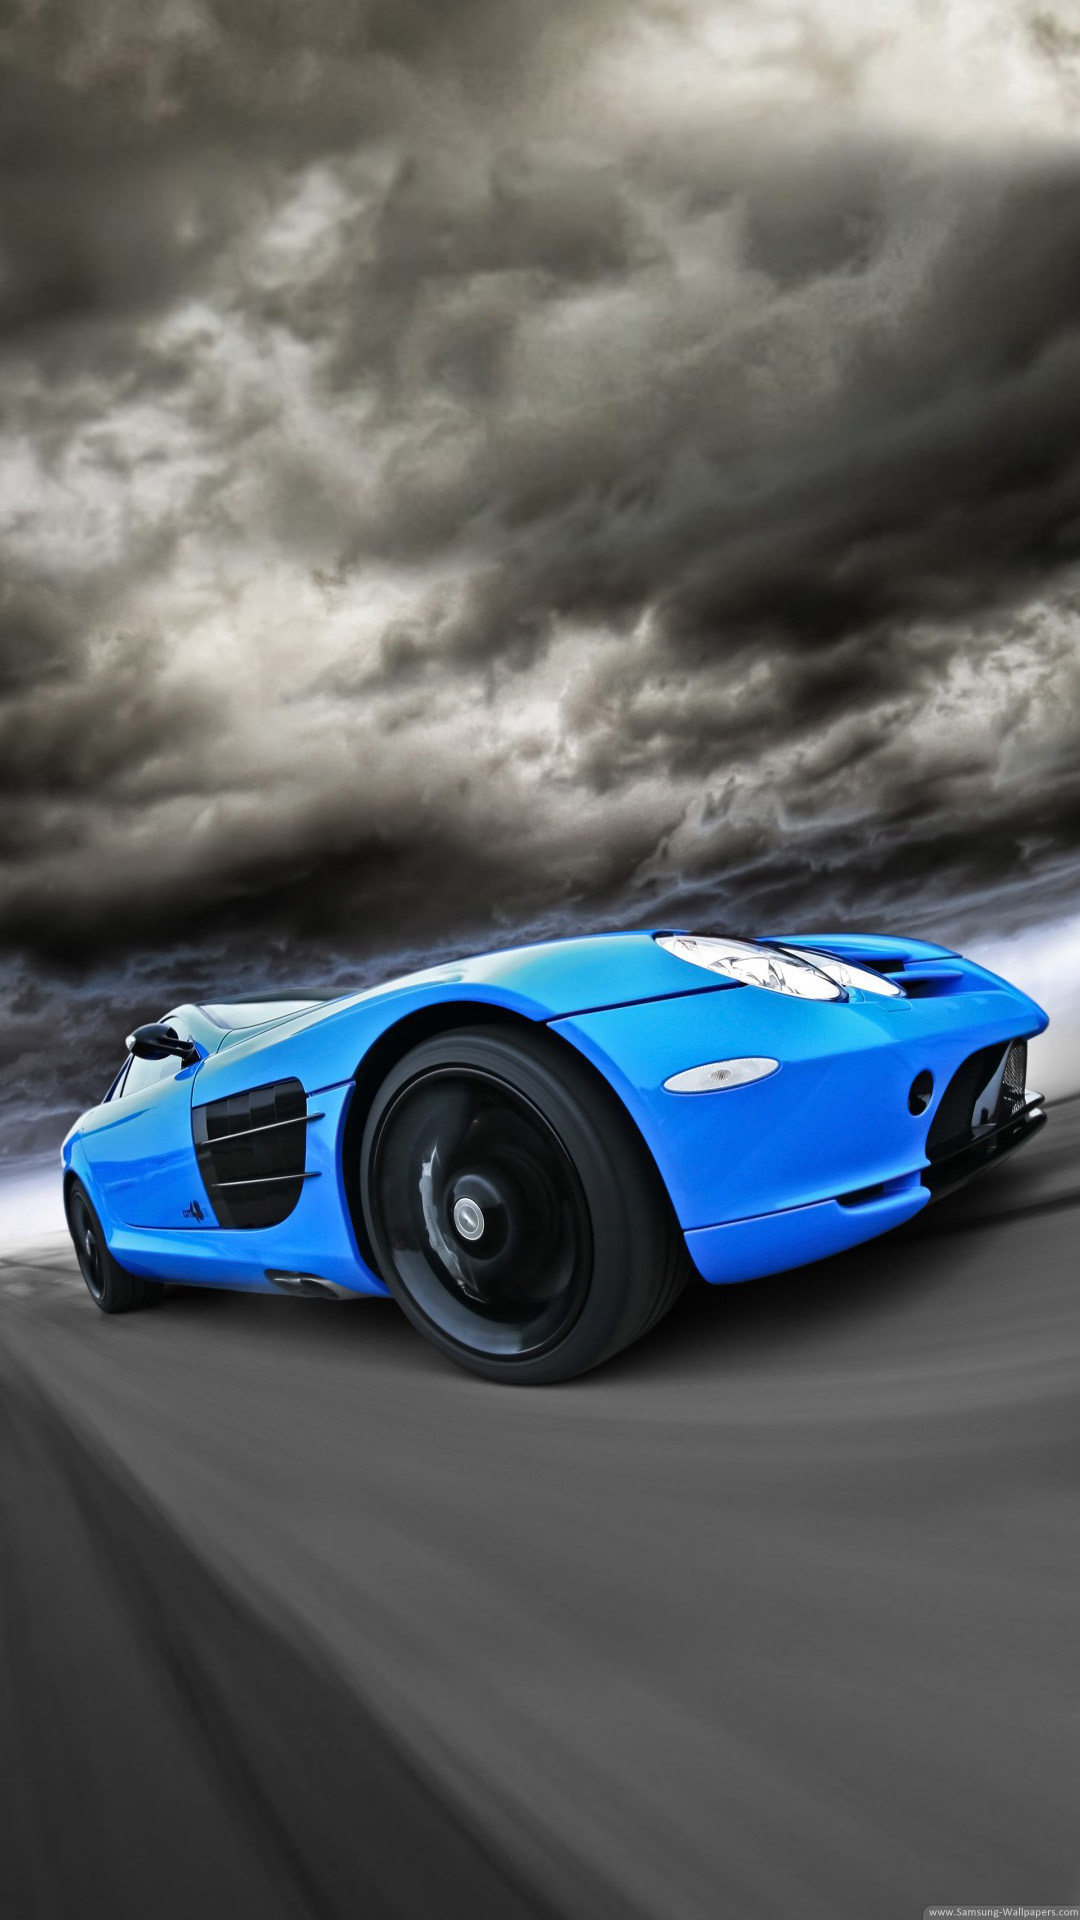 Free download Awesome HD Car Wallpaper Blue Car Wallpaper iPhone 1080x1920 [1080x1920] for your Desktop, Mobile & Tablet. Explore 1080x1920 Car Wallpaperx1920 Wallpaper, 1080x1920 Vertical Wallpaper, 1080x1920 Portrait Wallpaper